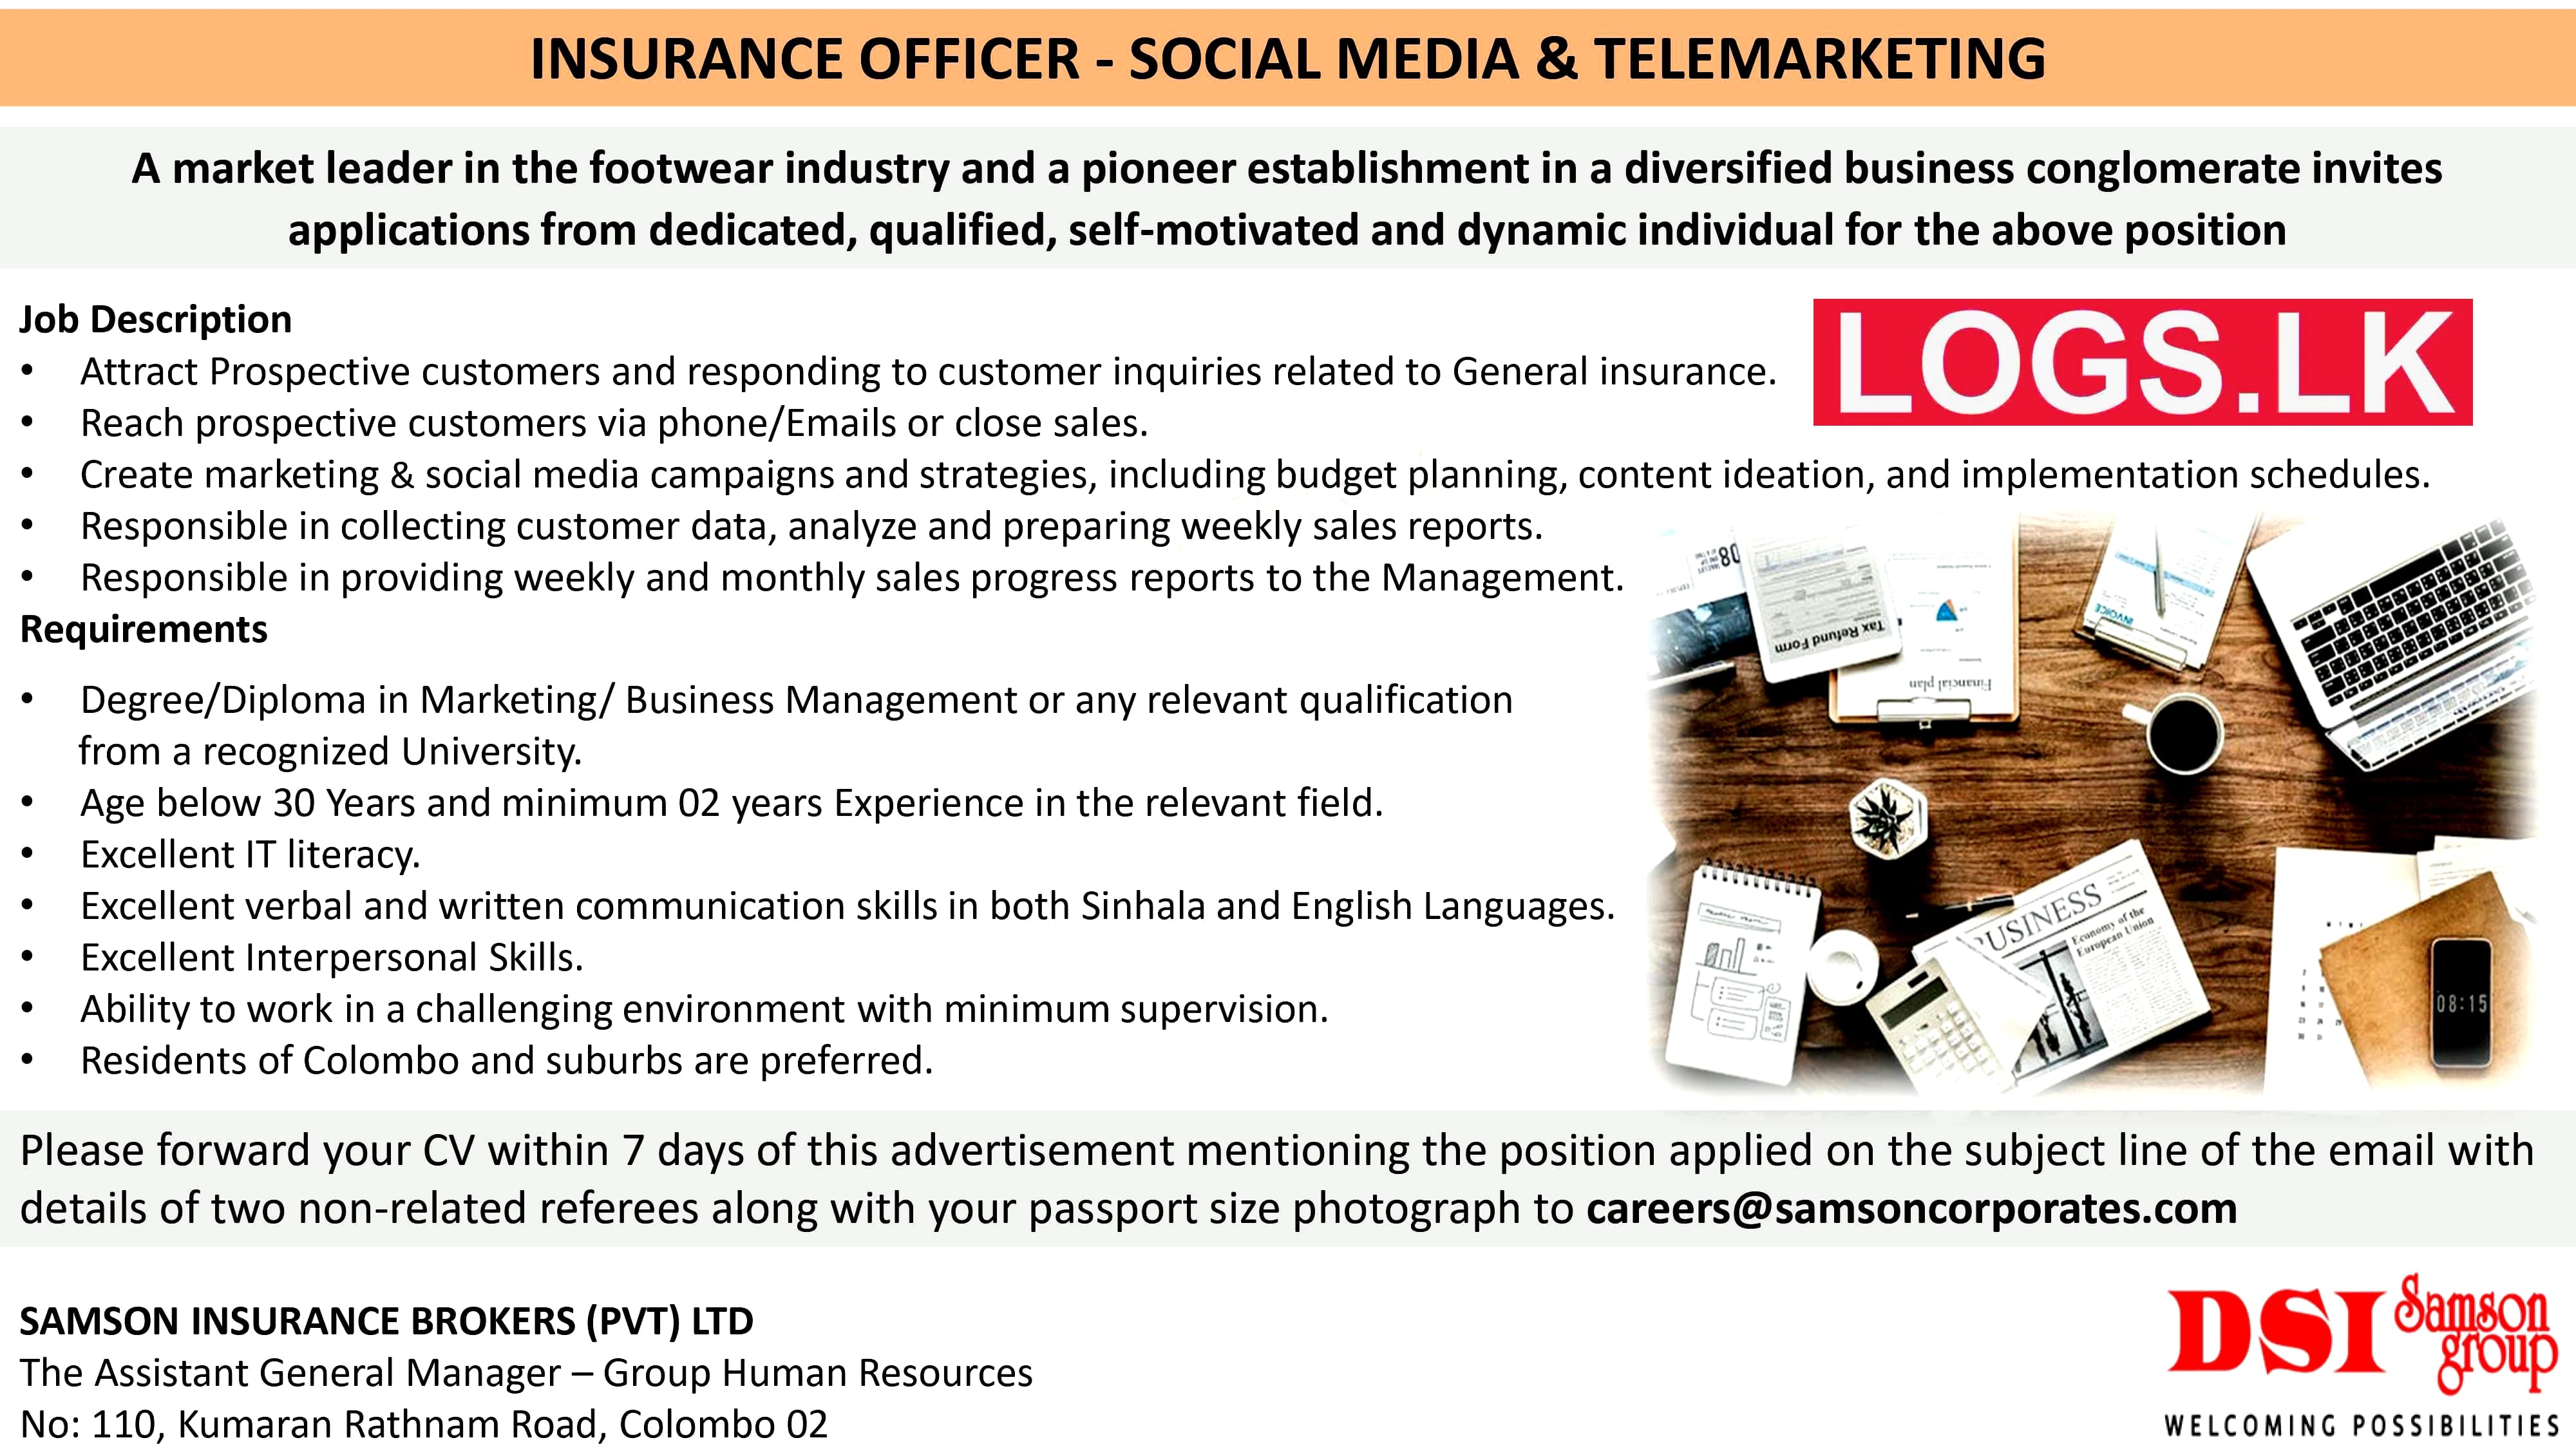 Insurance Officer - Social Media and Telemarketing - DSI Samson Group Jobs Vacancies